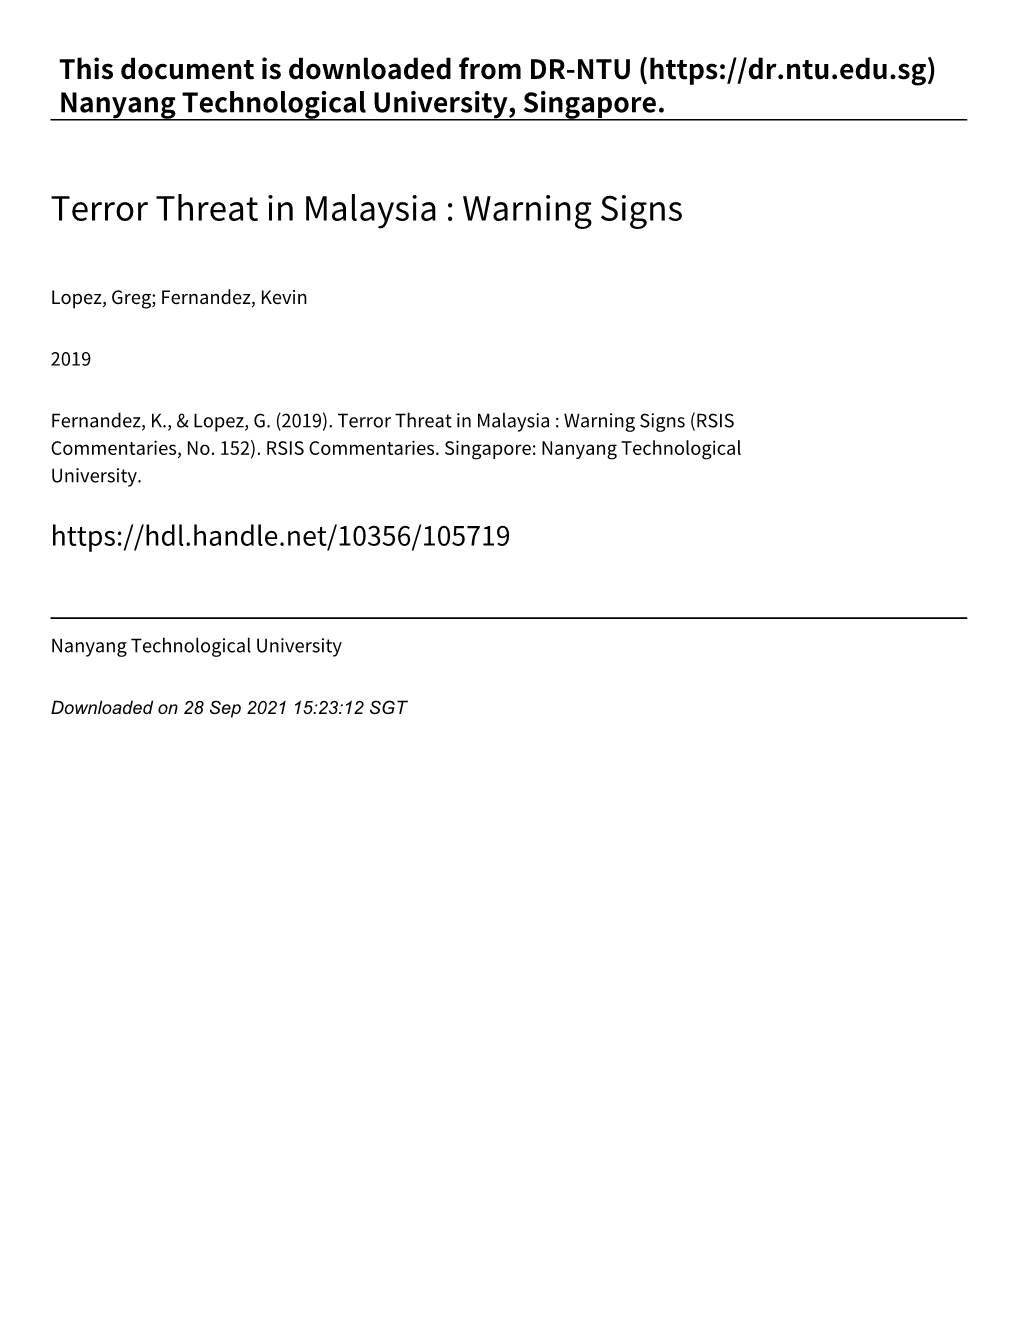 Terror Threat in Malaysia : Warning Signs